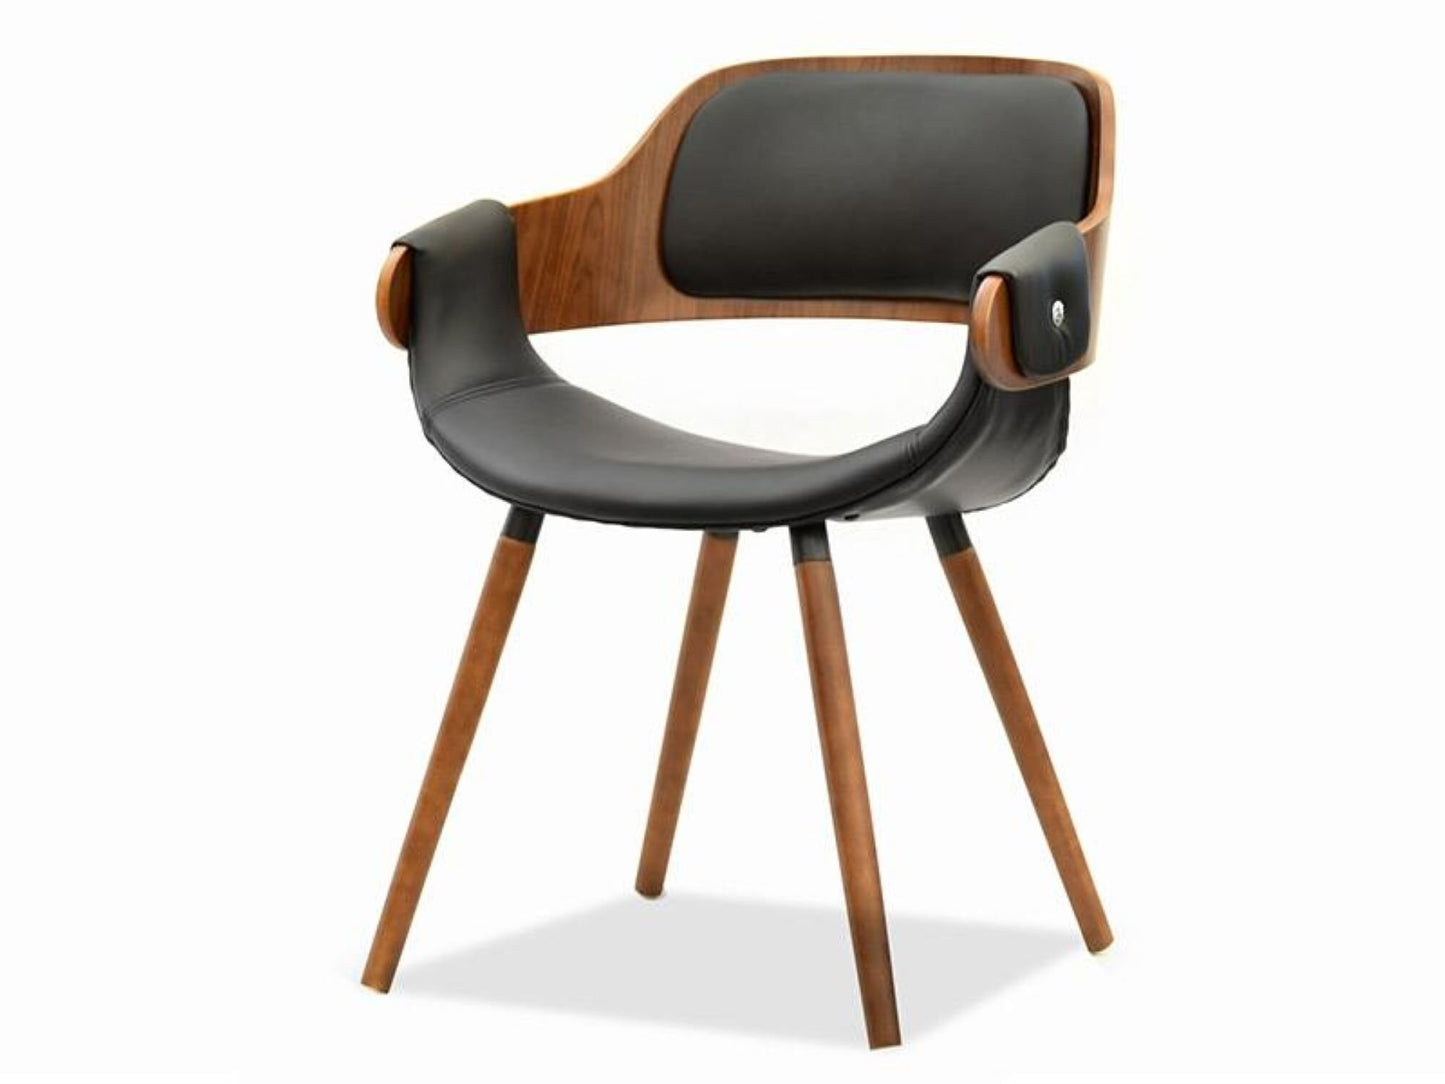 NEW Designer RETRO SCANDI Style dining/ office / desk chair grey or black and walnut wood veneer